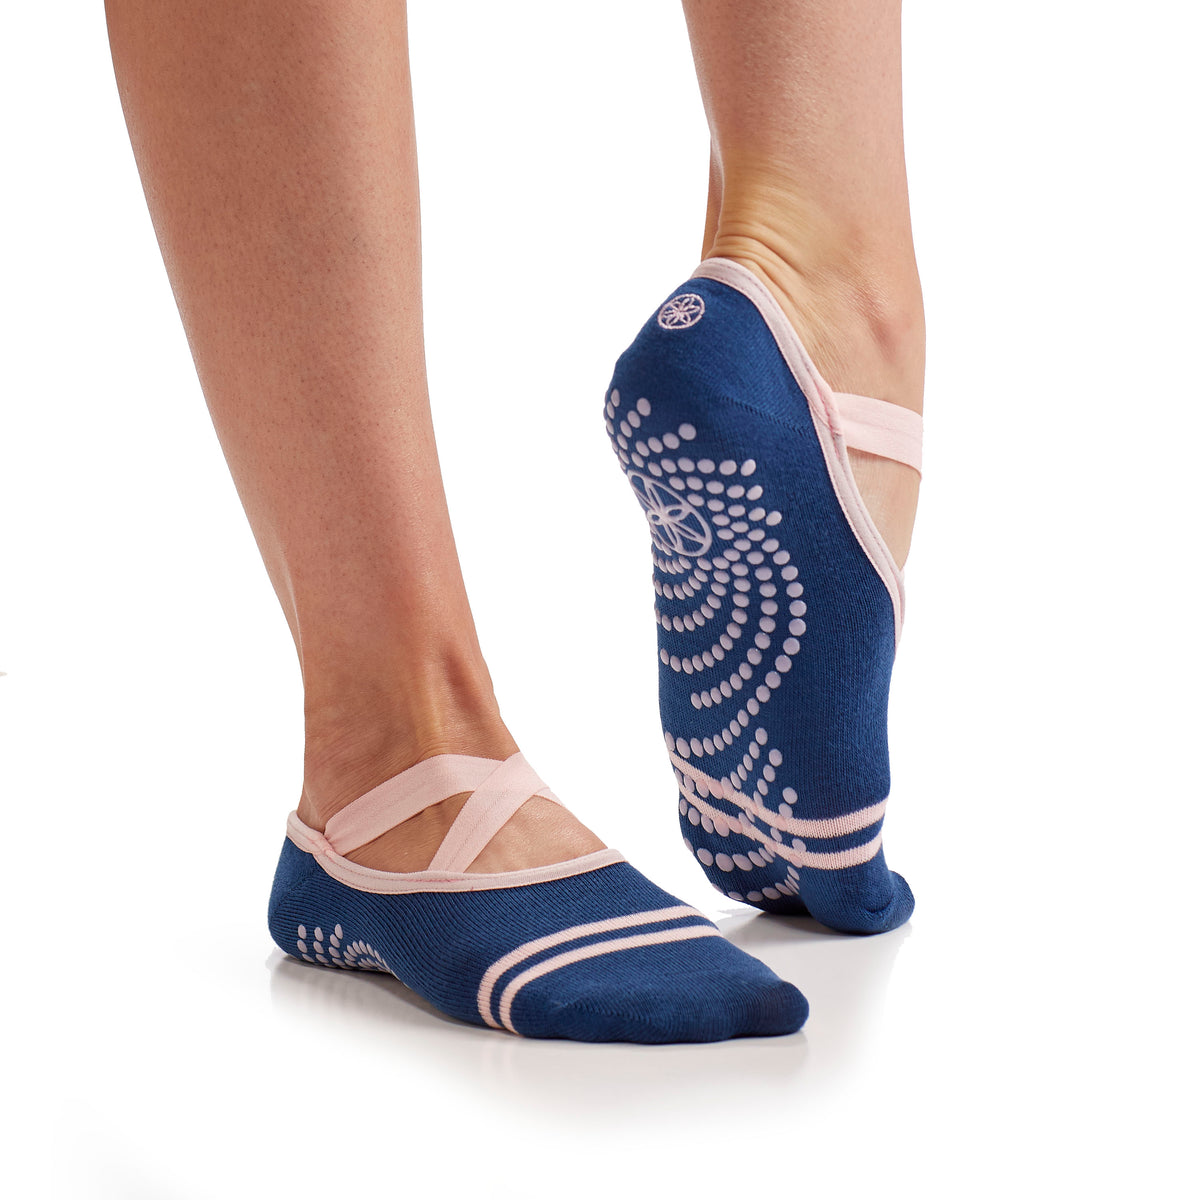 Buy Grippy Socks Pilates, Barre, Yoga Online in India 